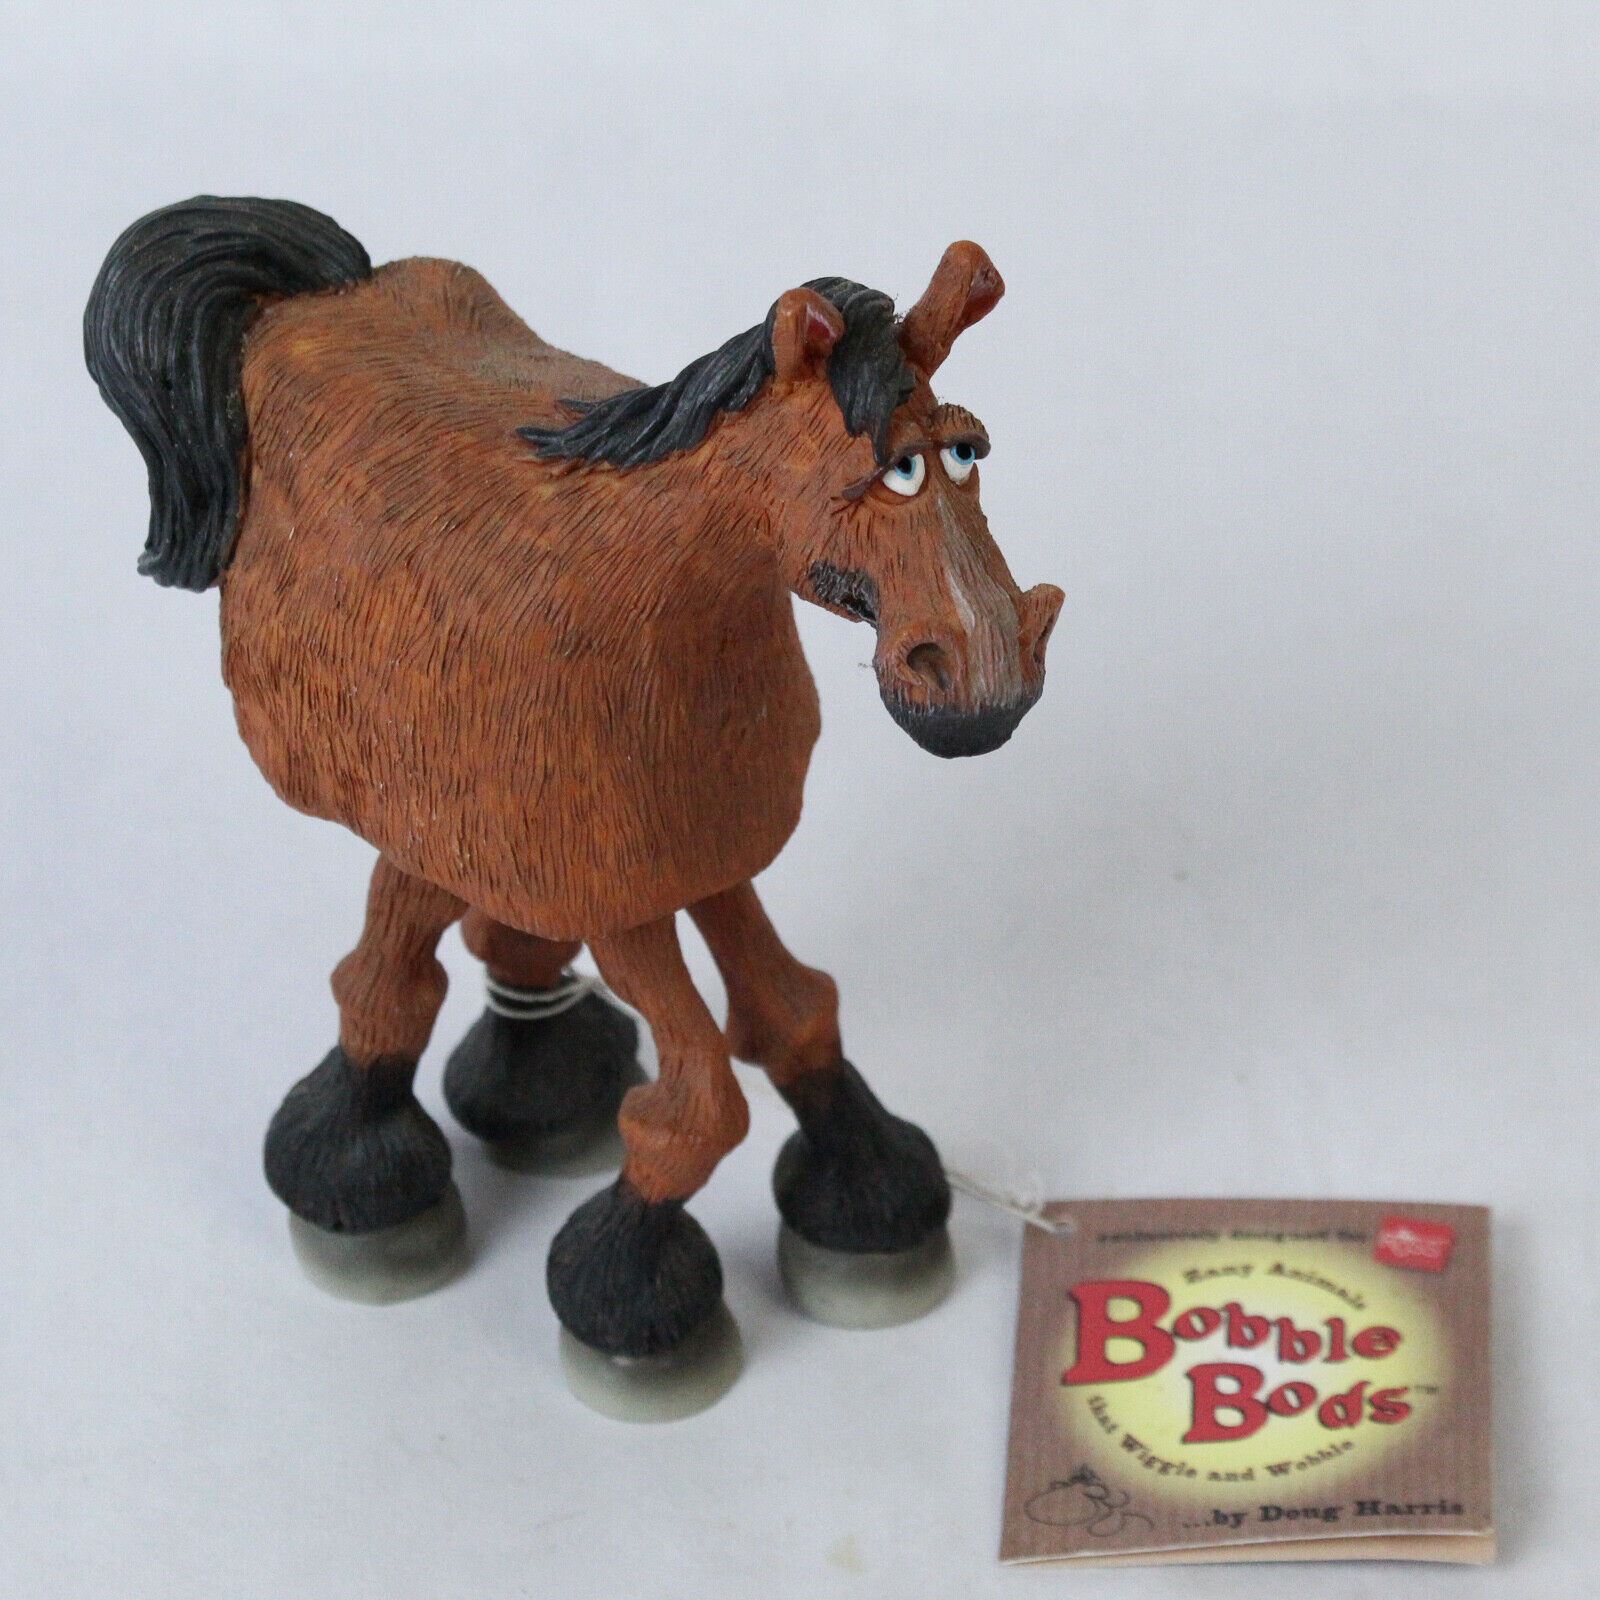 Vintage Russ Doug Harris Horace Bobble Bods Horse Figurine Brown 24290